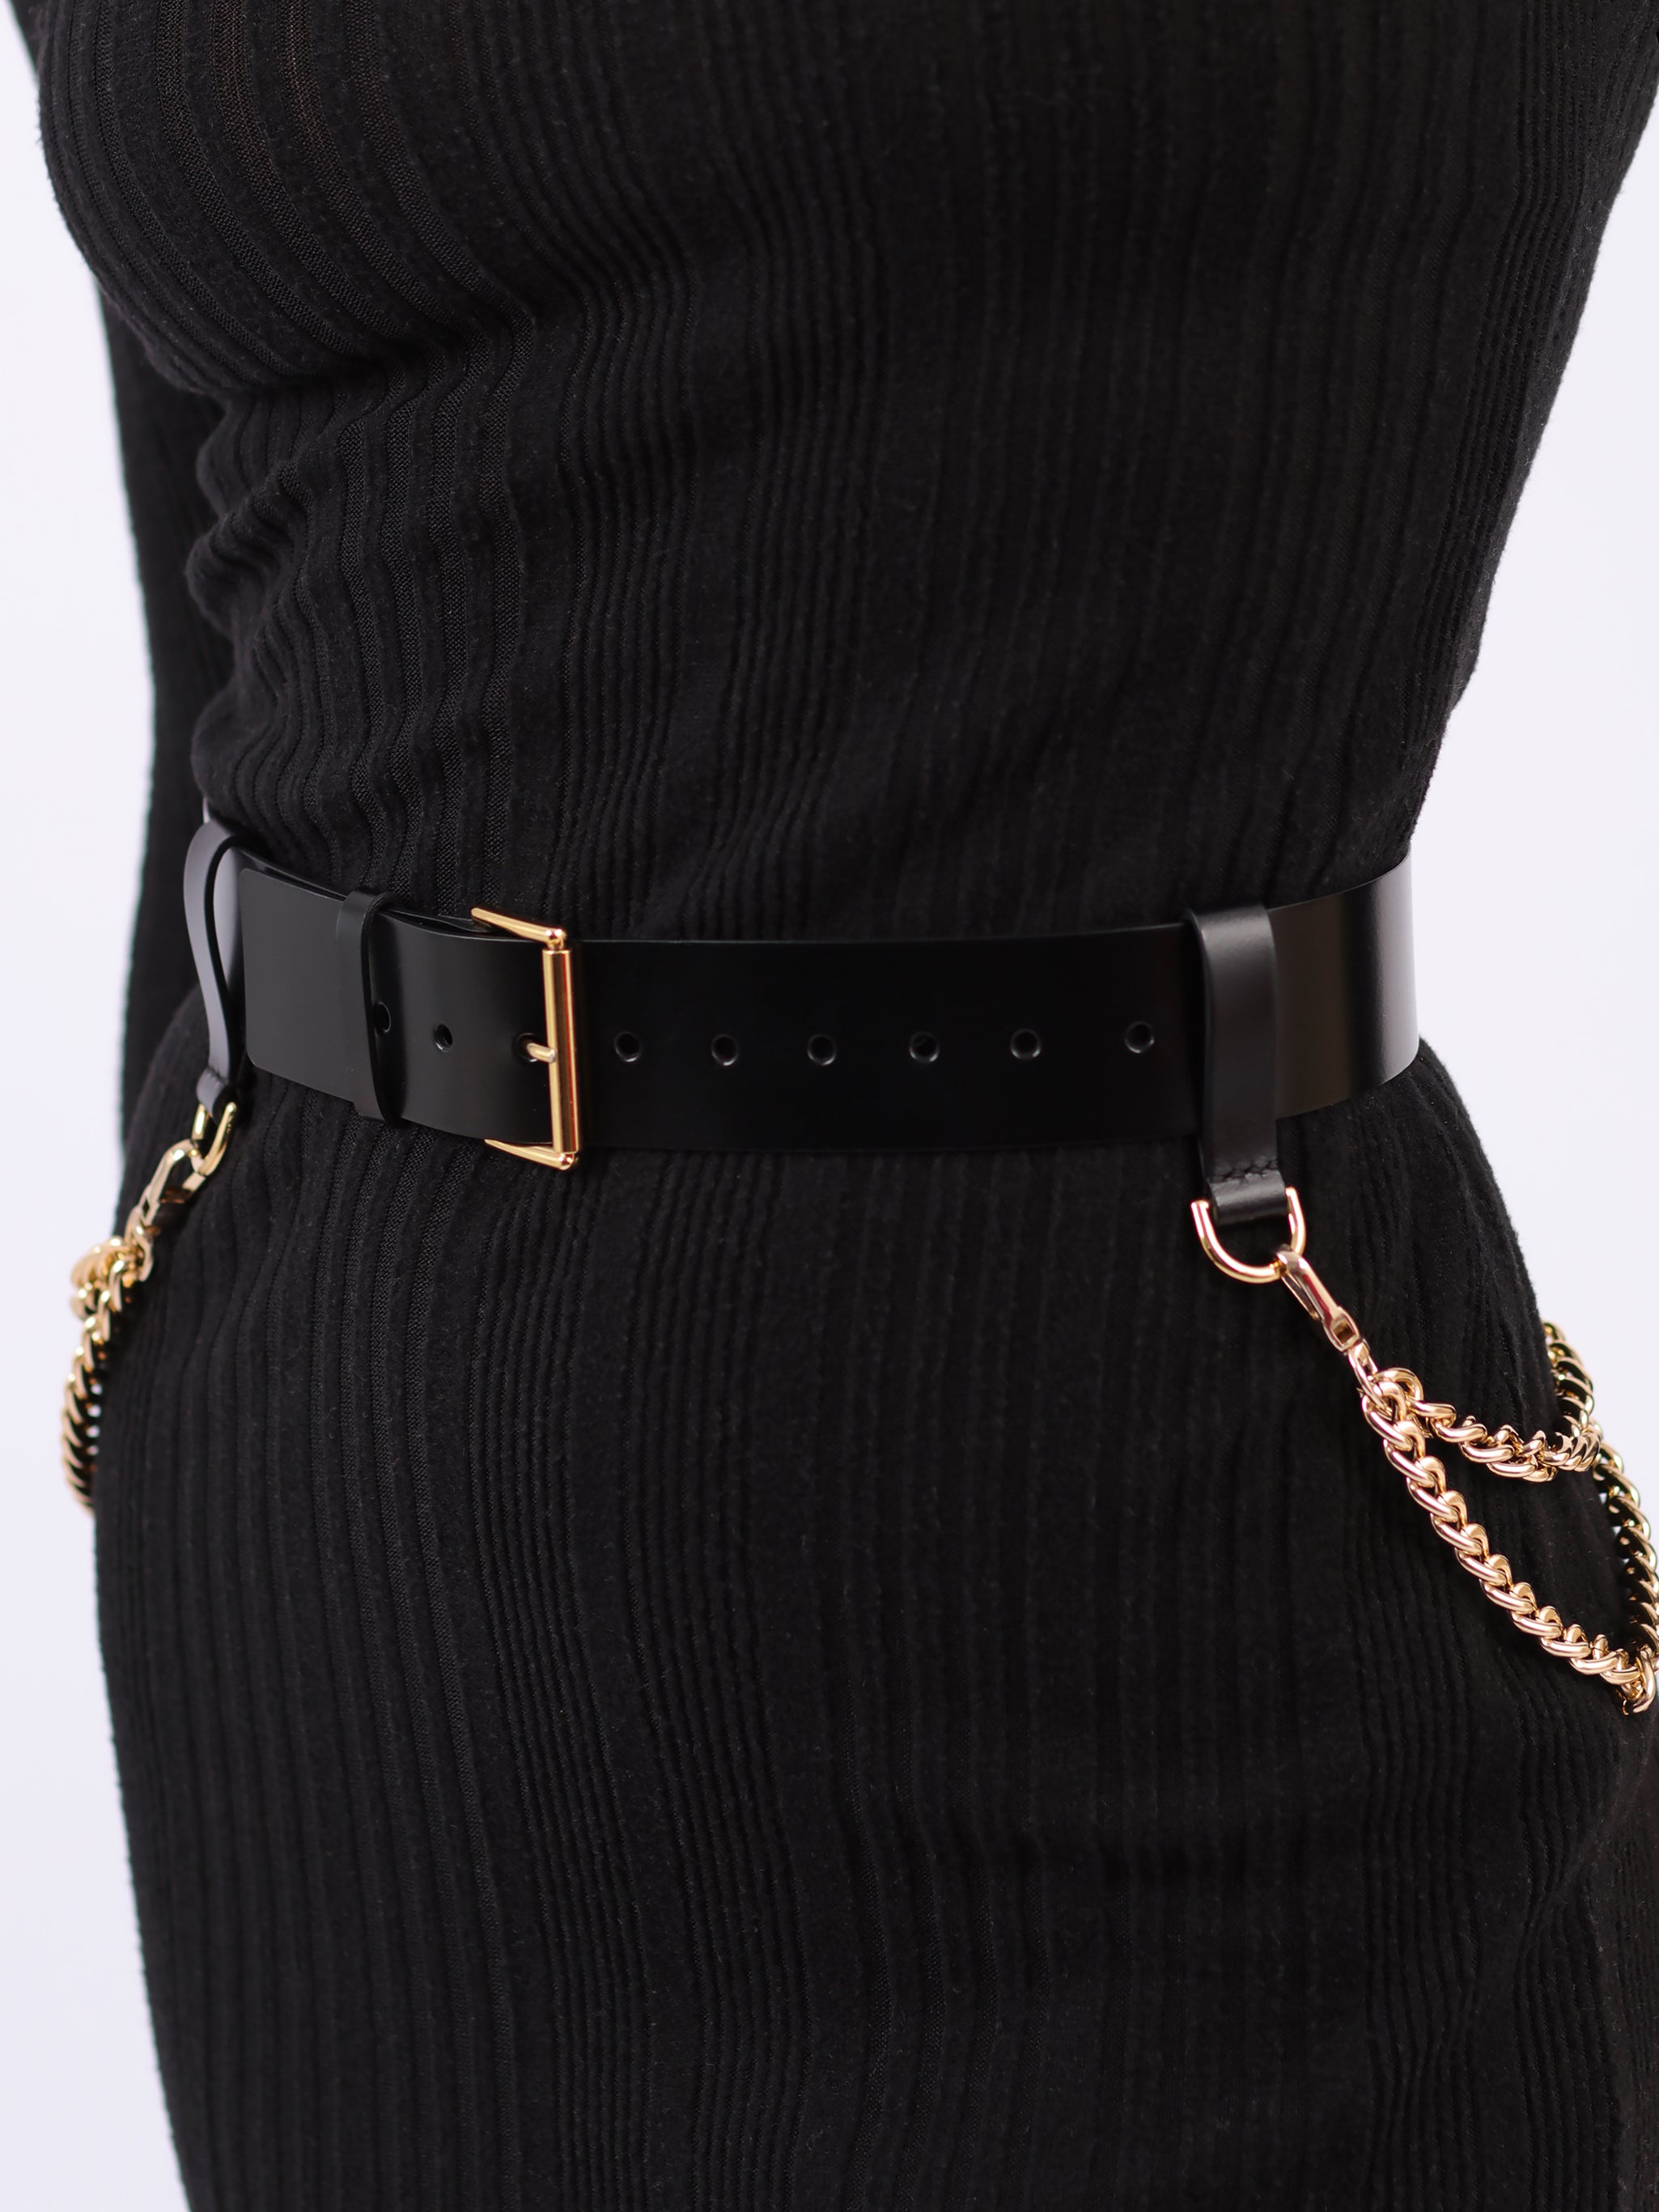 Double Chain Belt | Black Leather Chain Belt | HAUTE CUIR – Haute Cuir